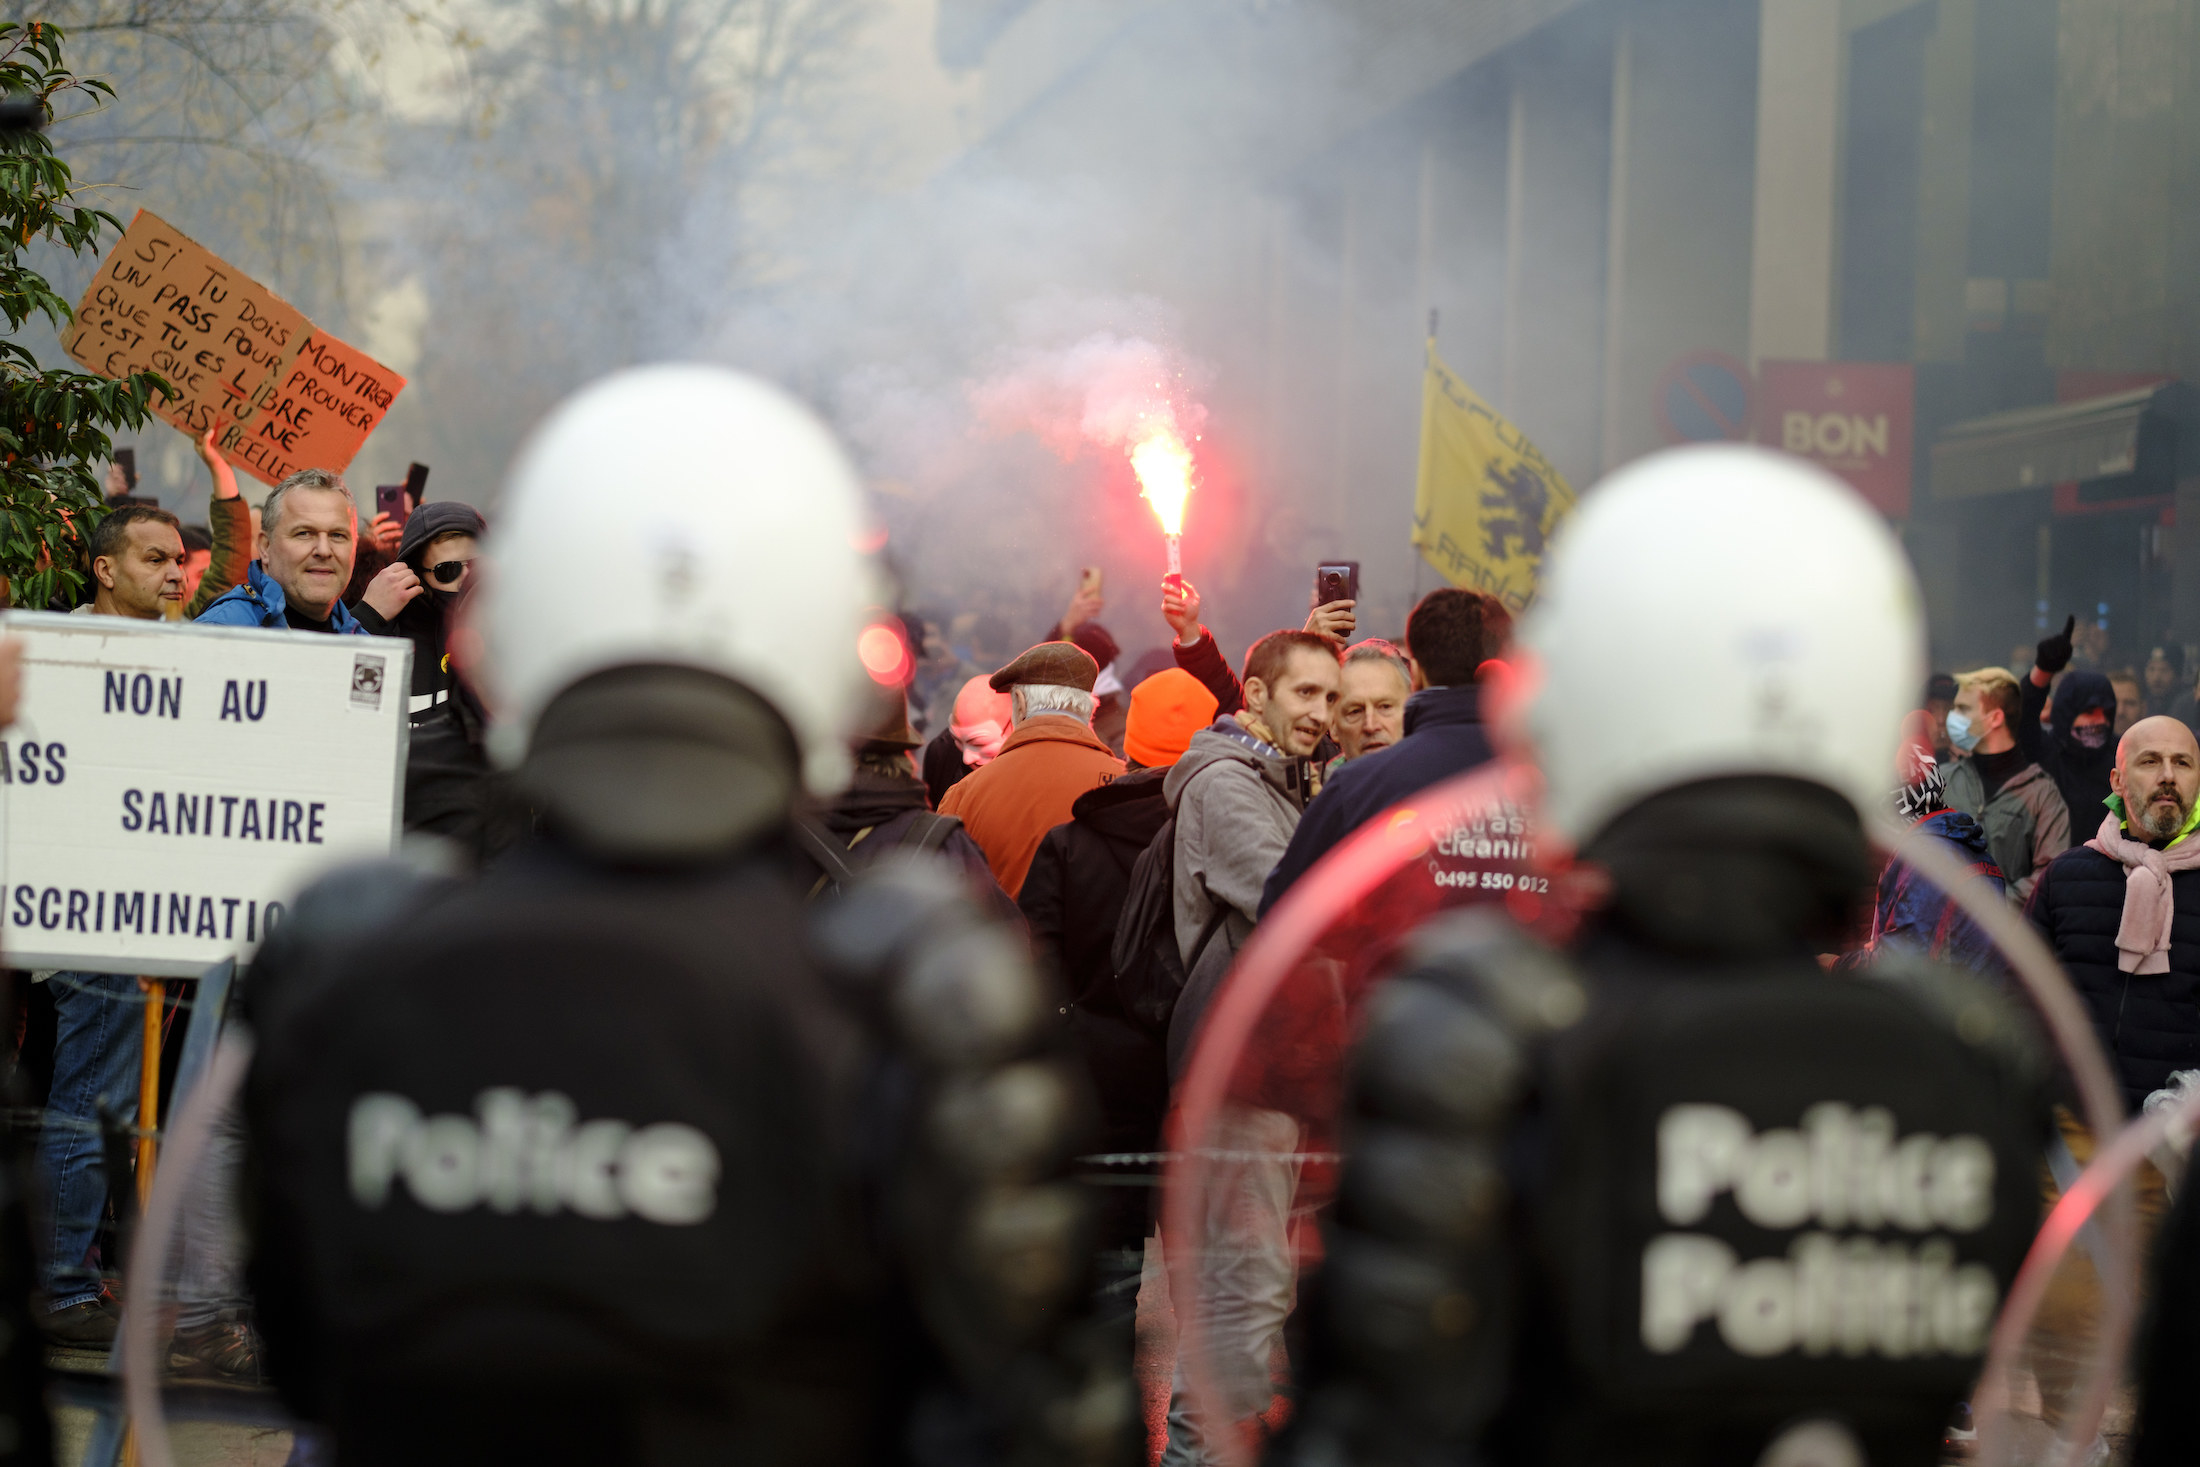 Europe's COVID-19 vaccine mandates spark violent protests